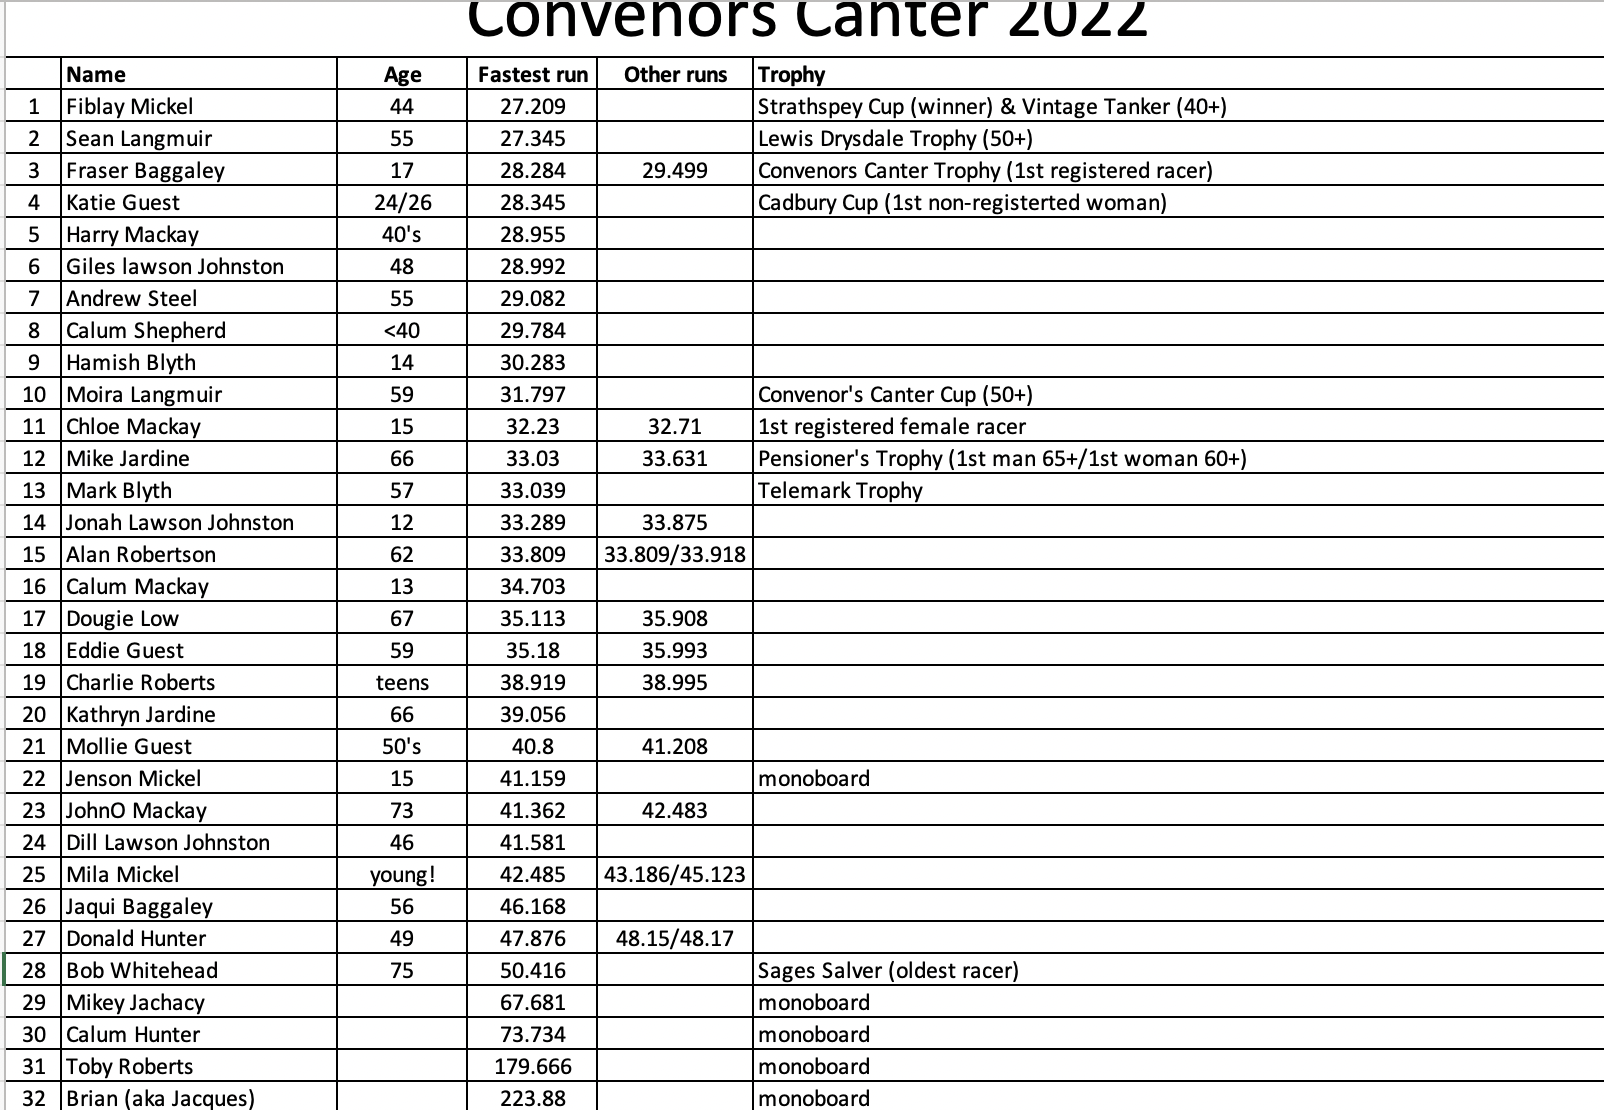 Convenors Canter Saturday 23 April 2022, Cairngorm RESULTS!!